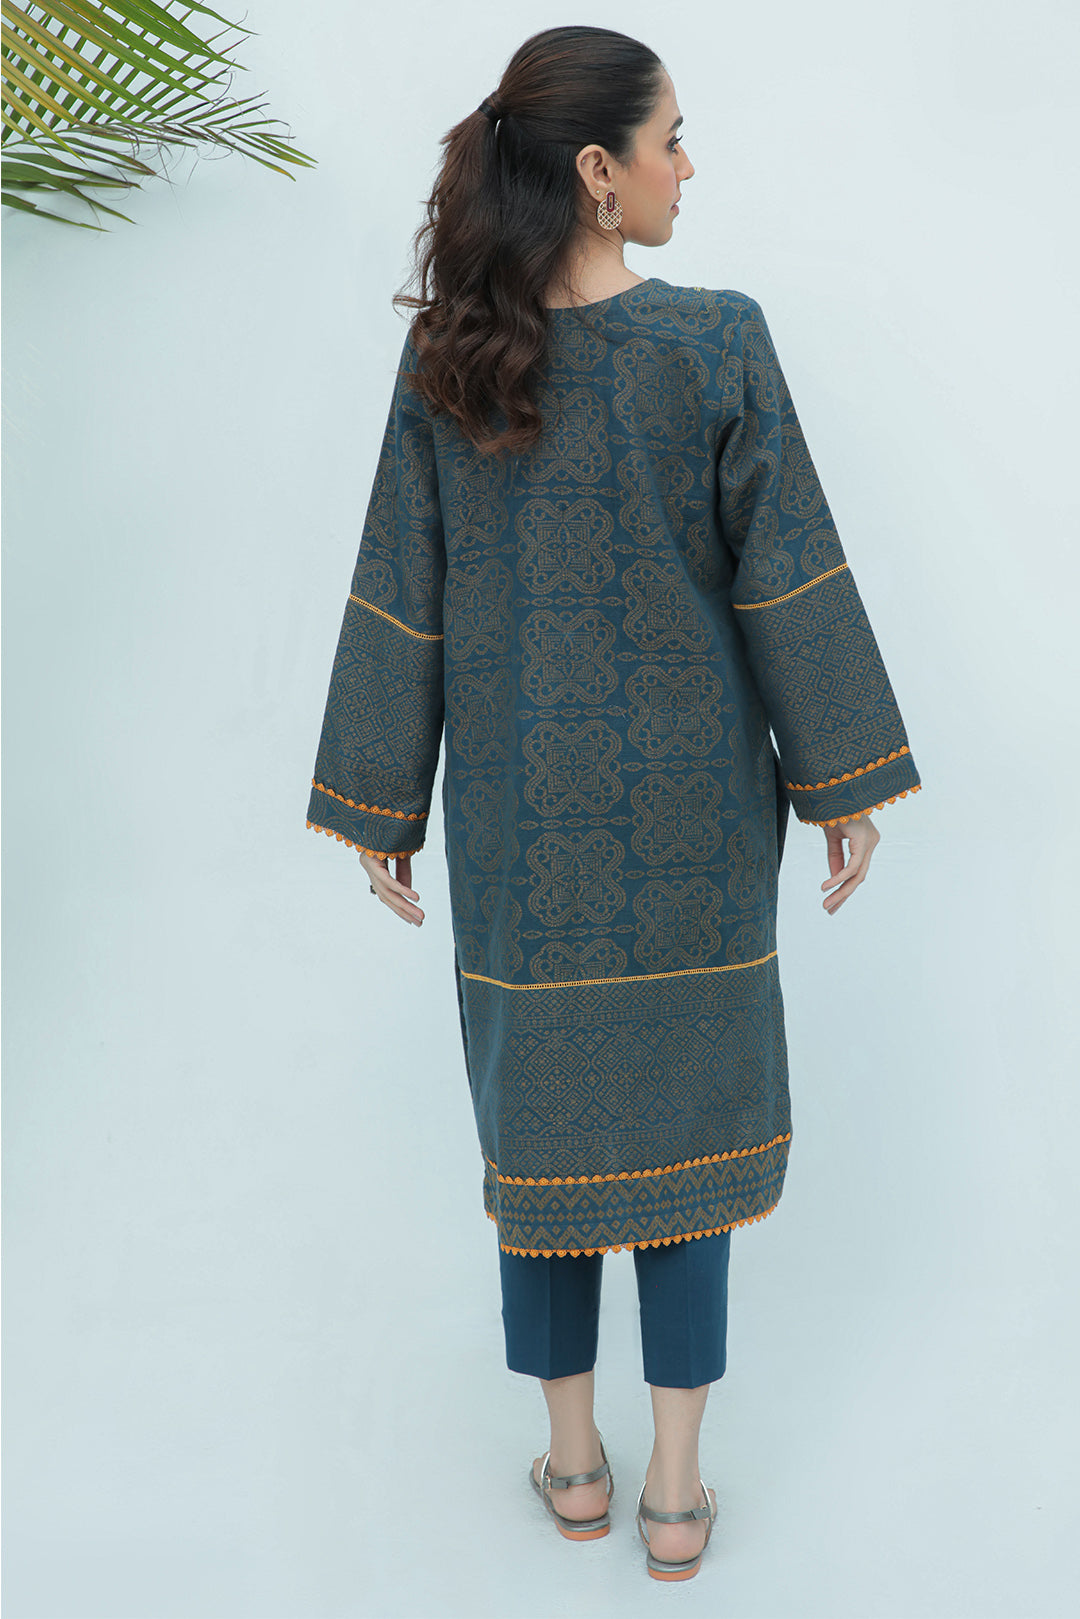 1 Piece - Dyed Embroidered Slub khaddar Jacquard Shirt P0254